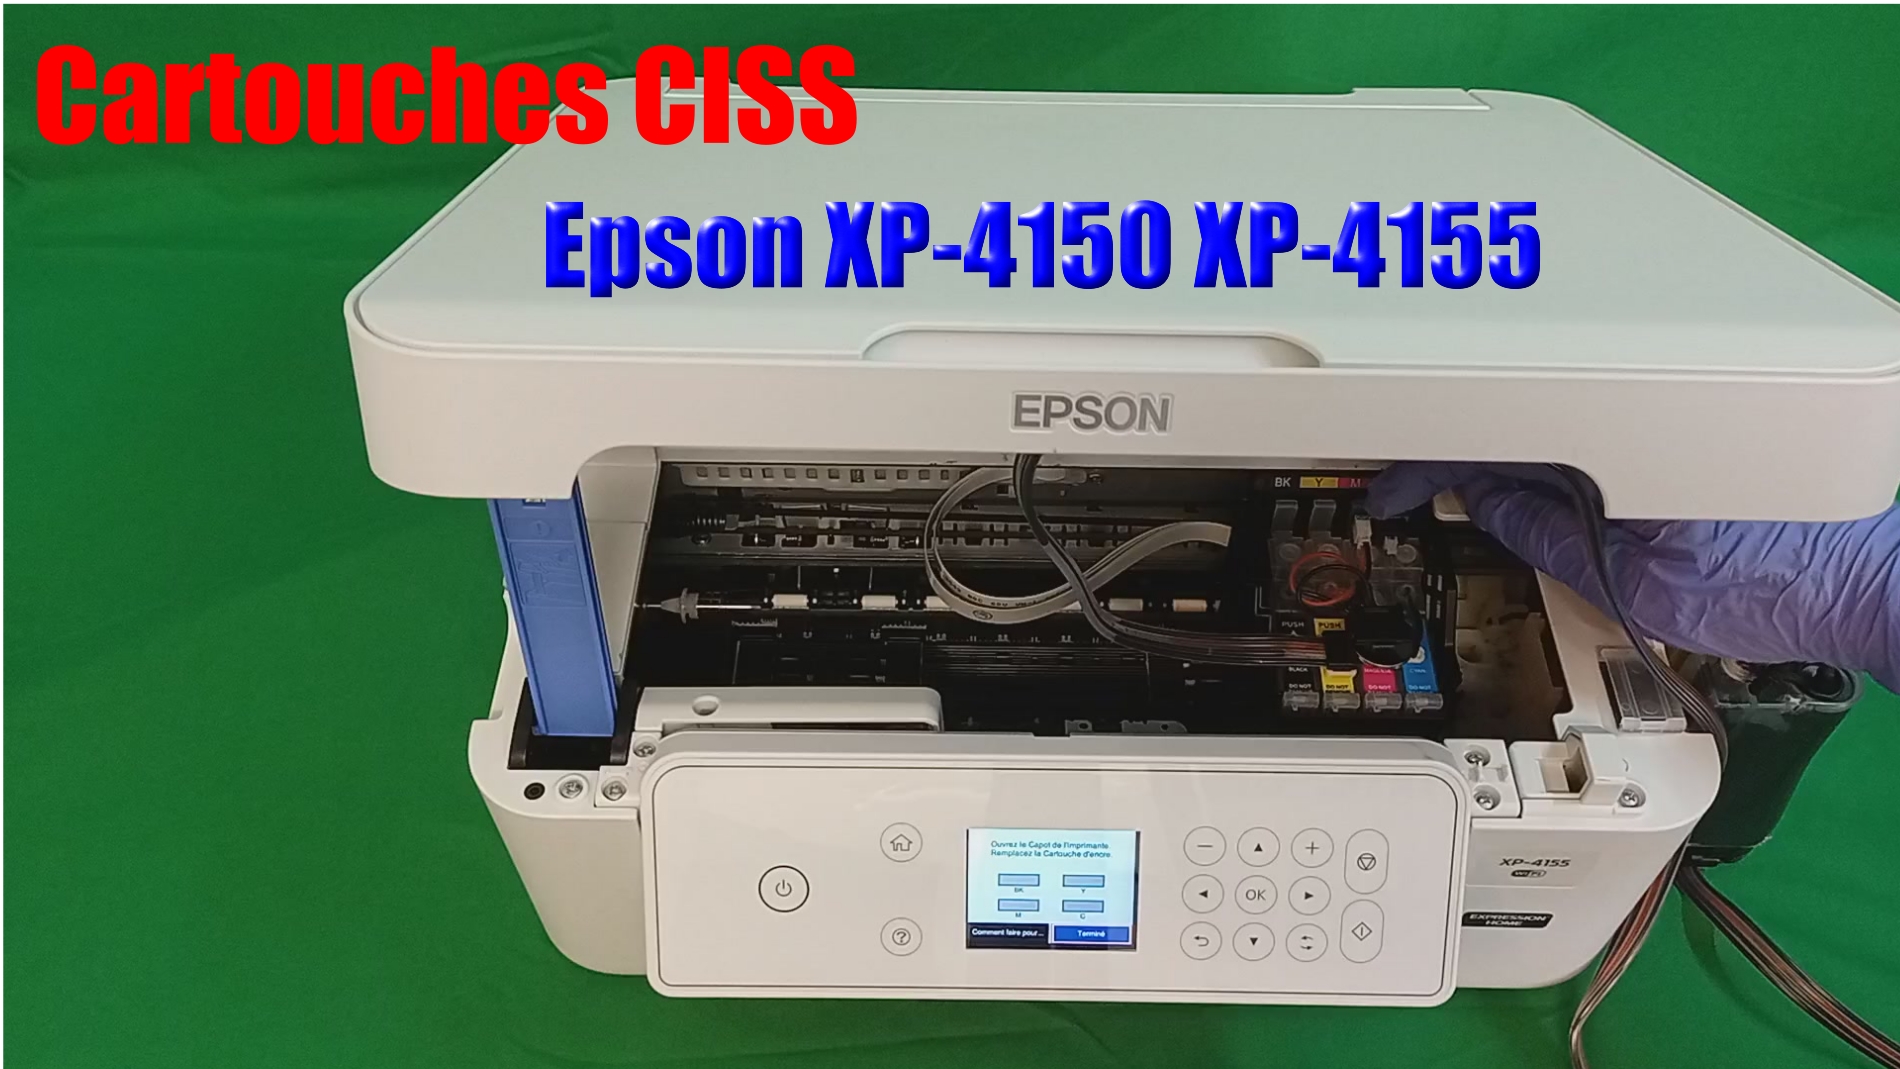 CARTOUCHES CISS POUR Epson XP-2150 XP-2155 + 400ml Encre de